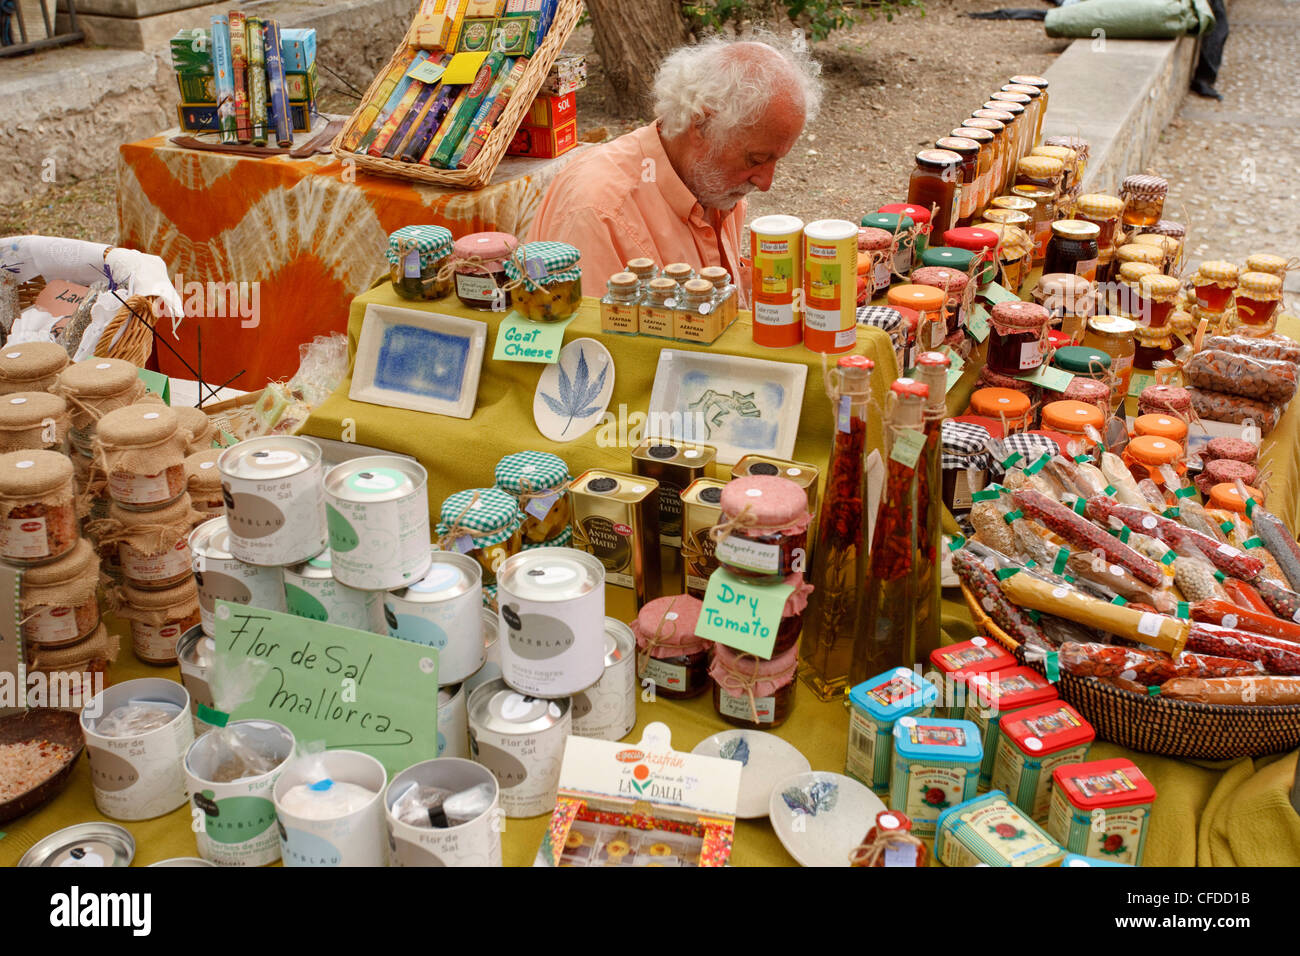 Weekly market, Arta, town, Mallorca, Balearic Islands, Spain, Europe Stock Photo